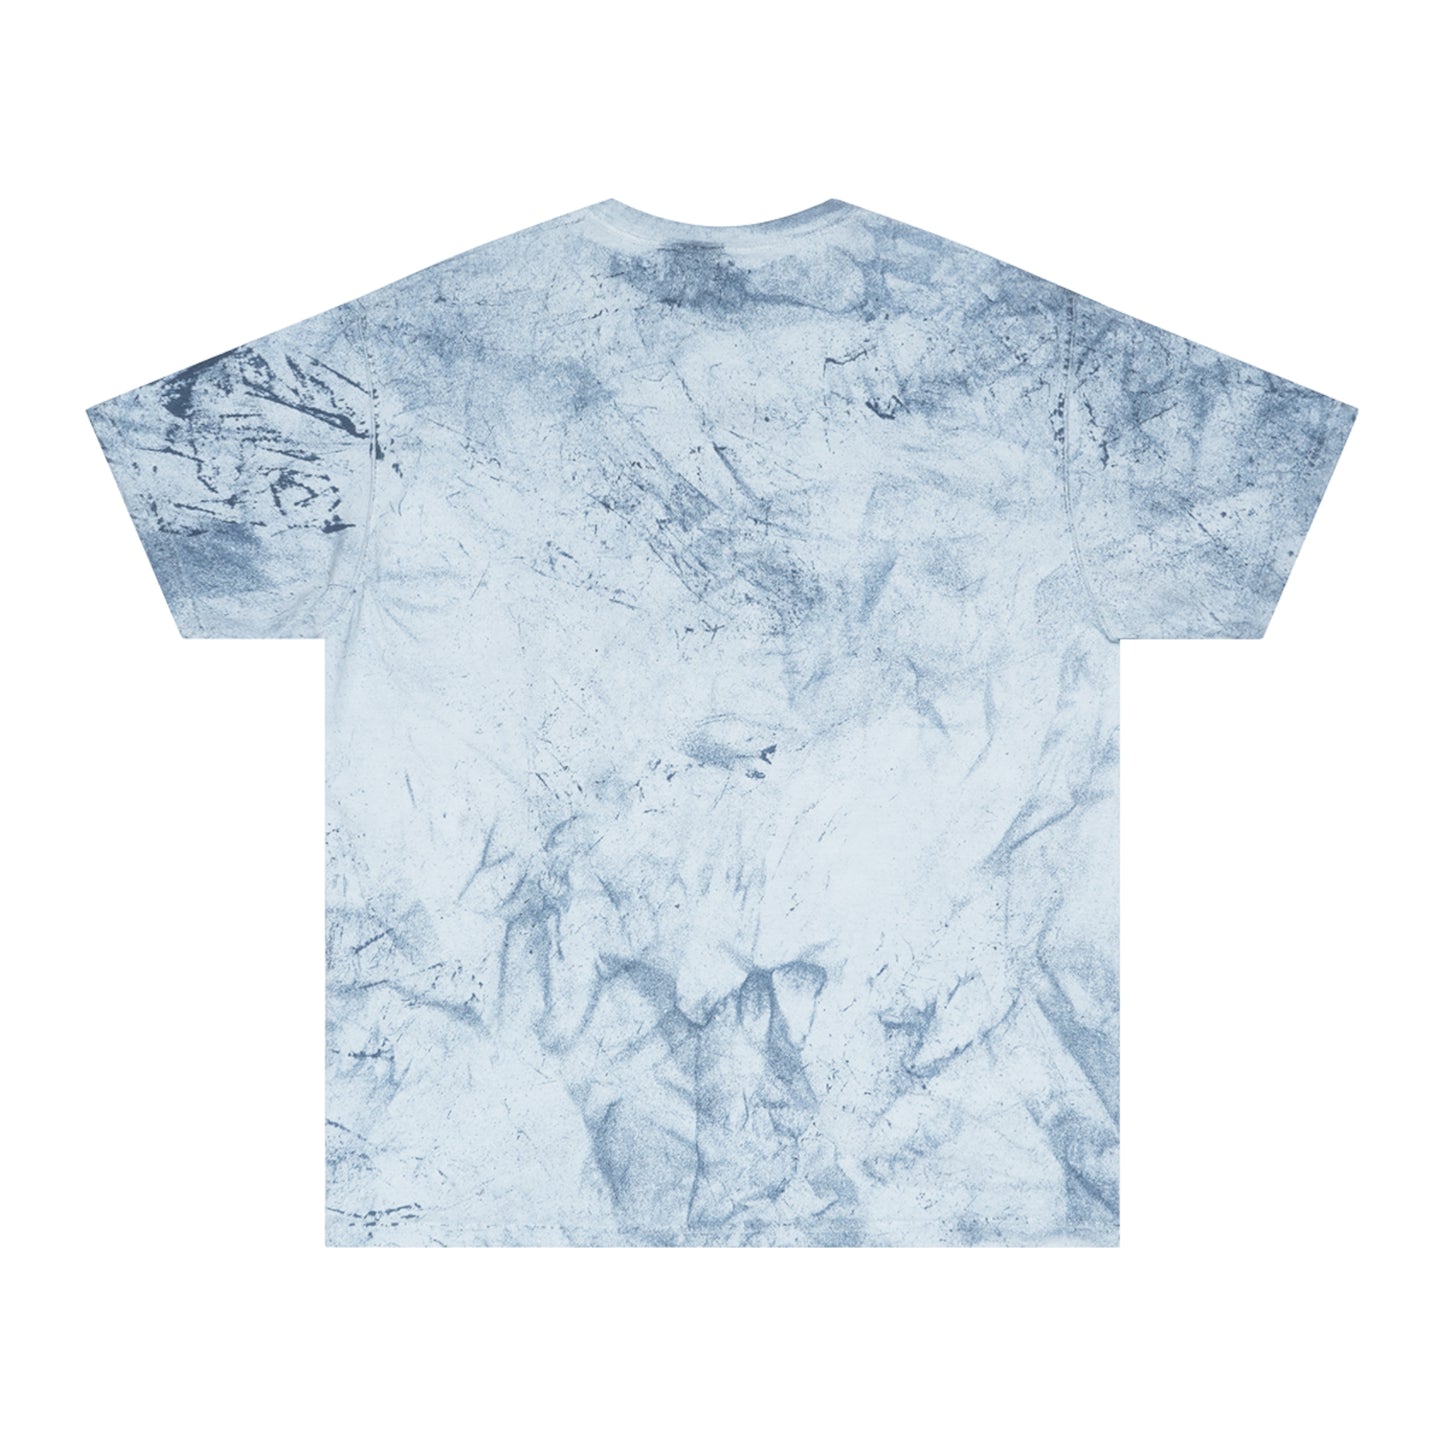 Unisex Color Blast Graphic T-Shirt (LIMITLESS)